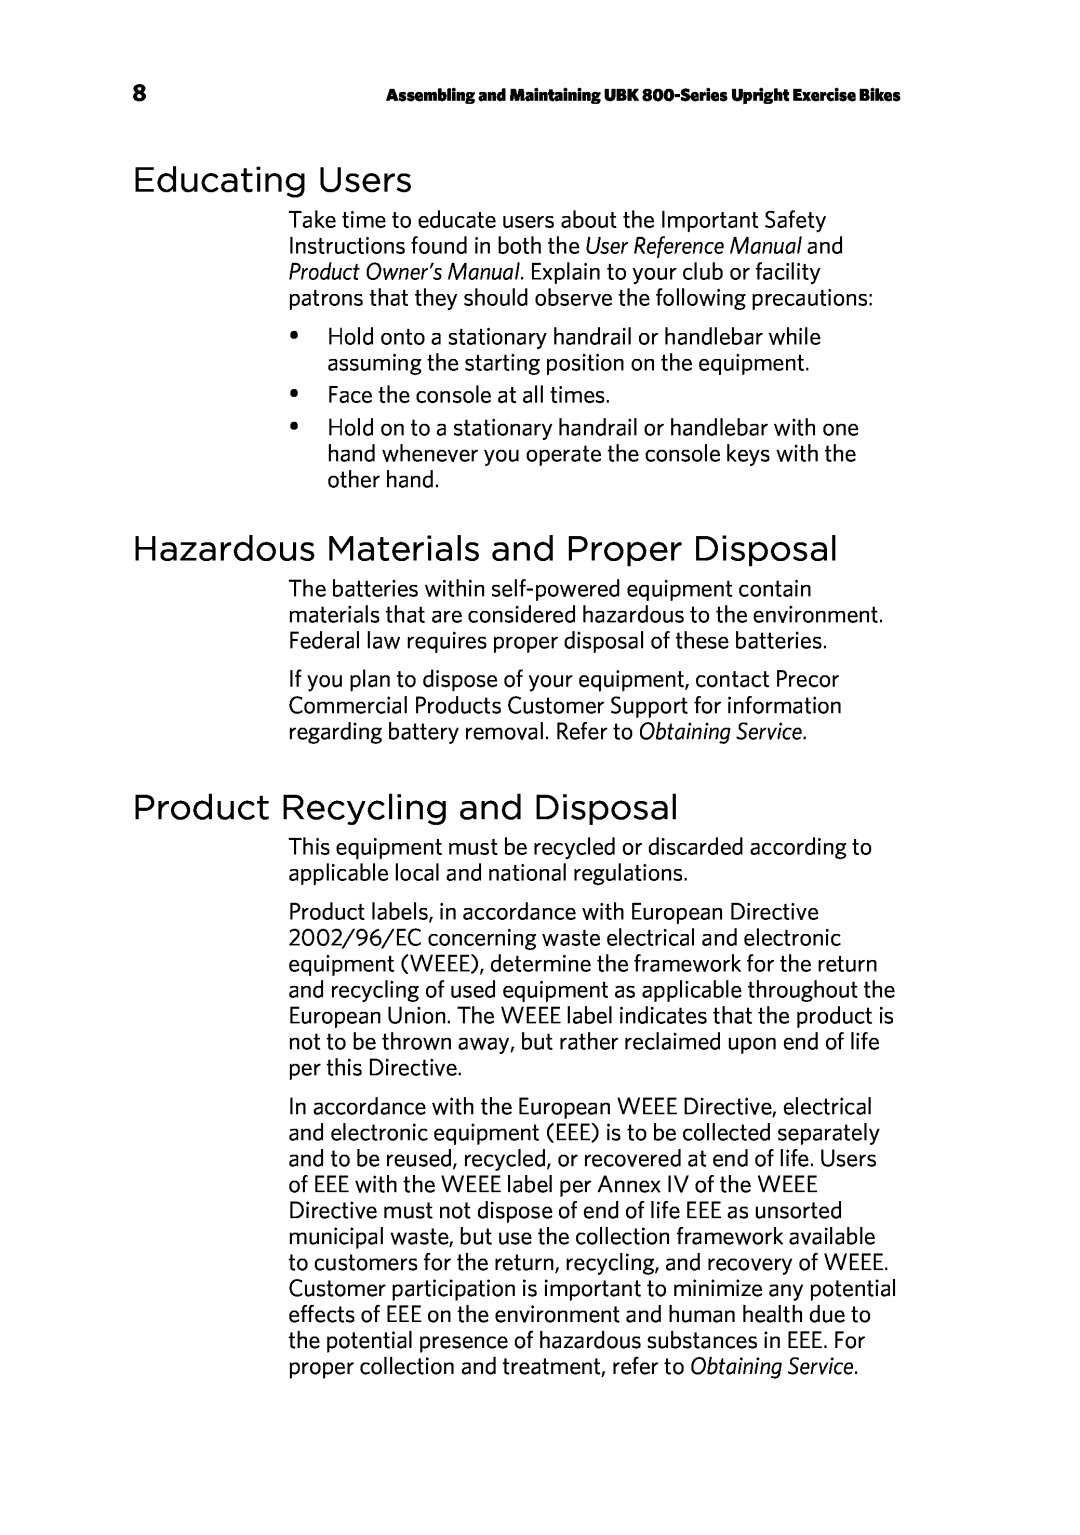 Precor P30 manual Educating Users, Hazardous Materials and Proper Disposal, Product Recycling and Disposal 